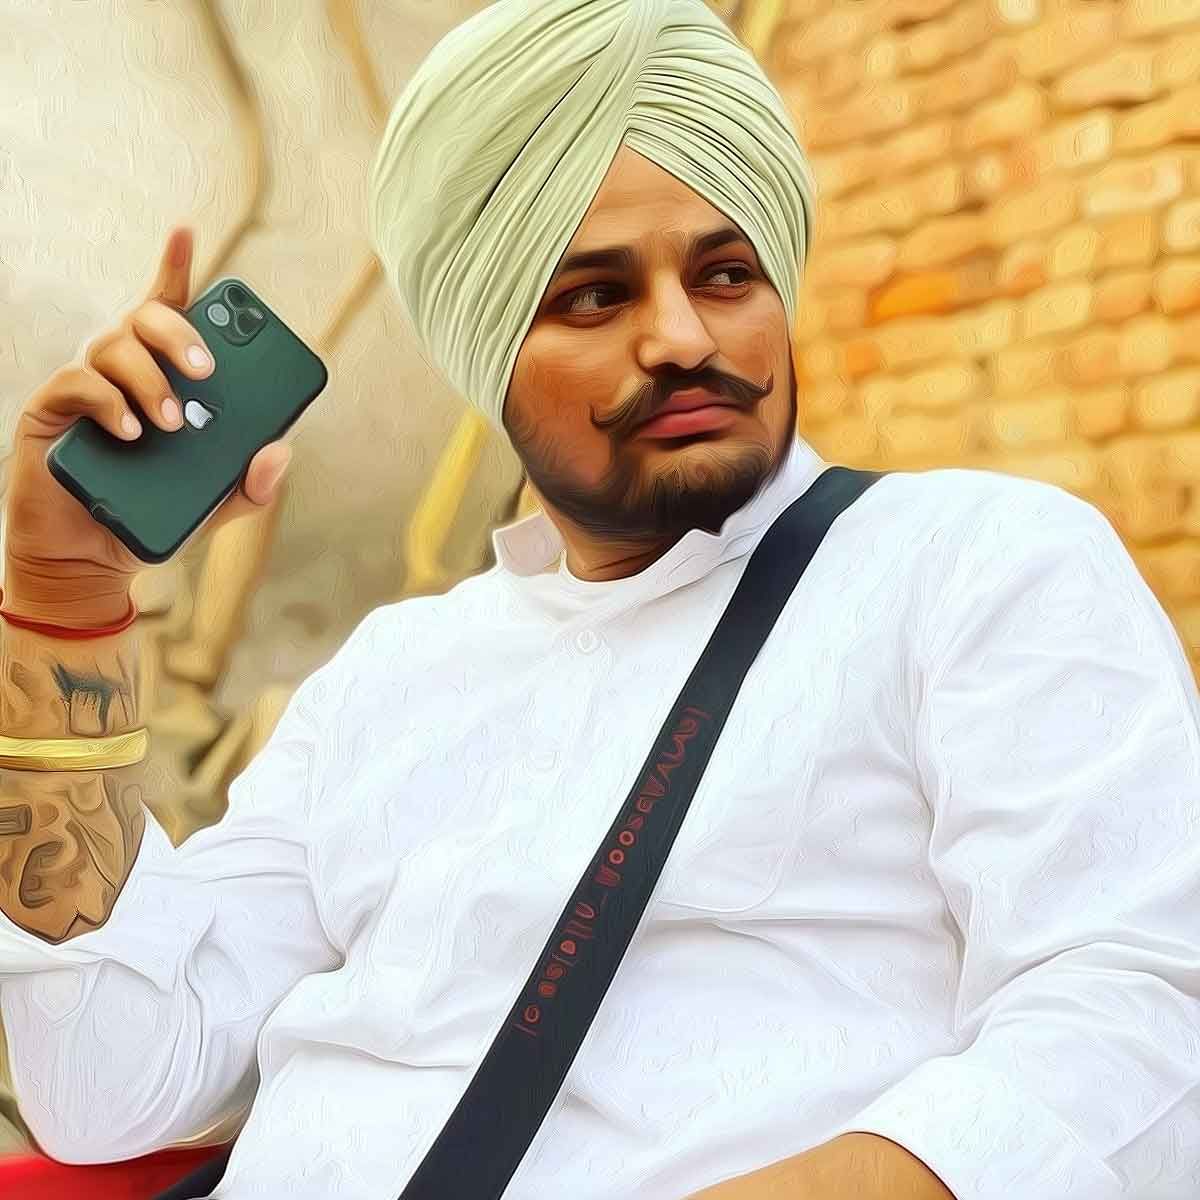 Famous Punjabi singer and rapper Sidhu Moosewala shot dead in an attack ...